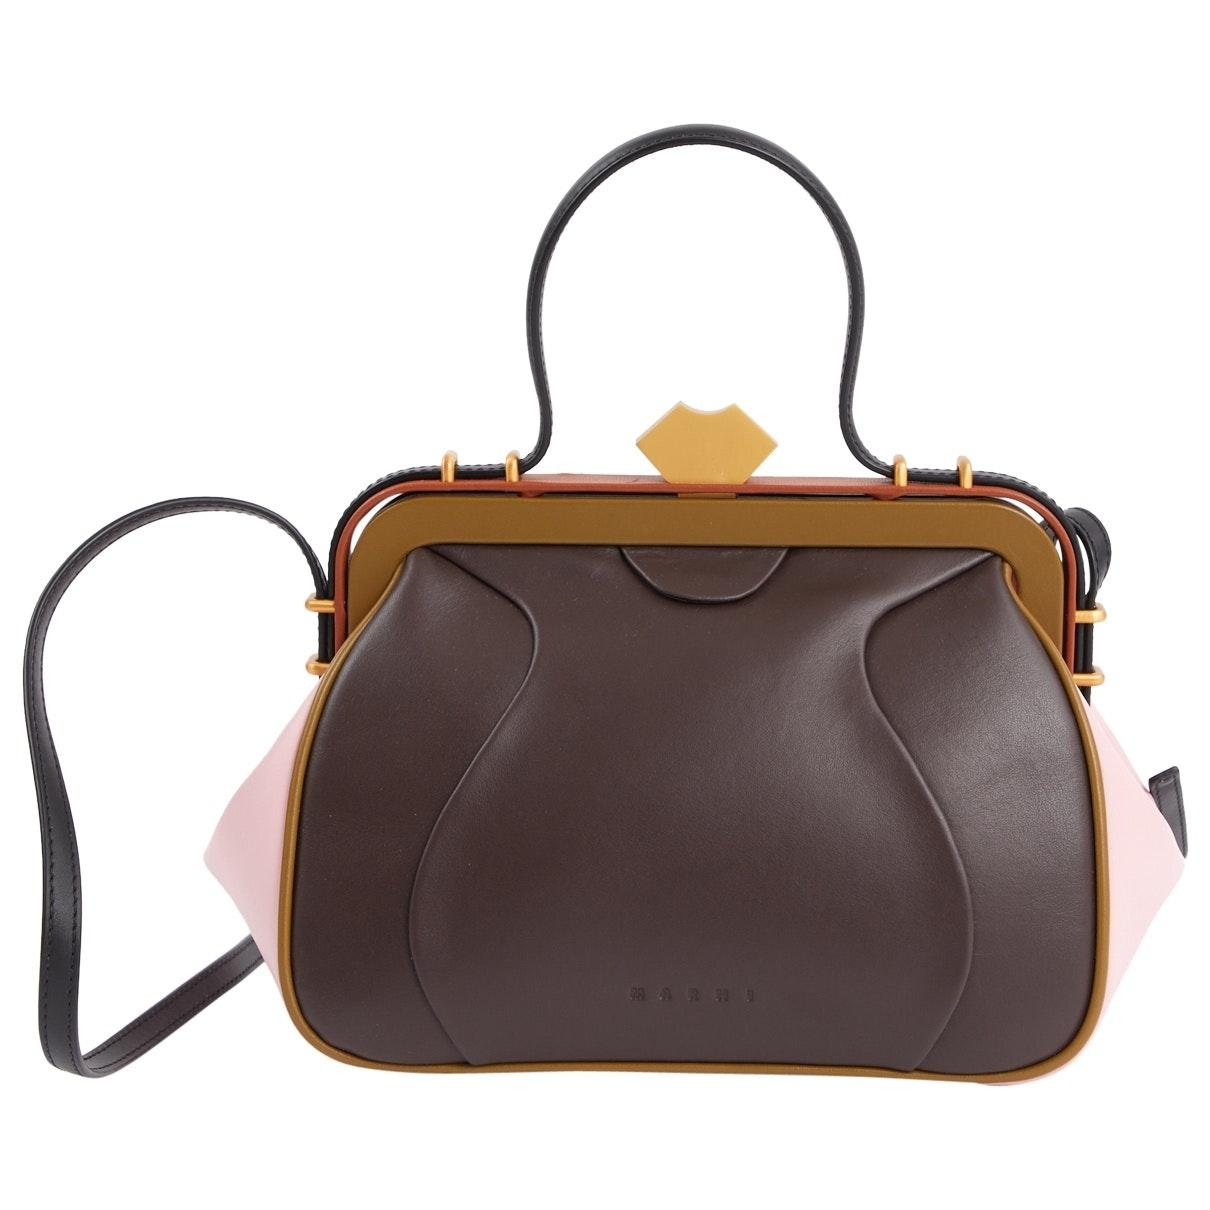 Marni Multicolour Leather Handbag in Brown - Lyst